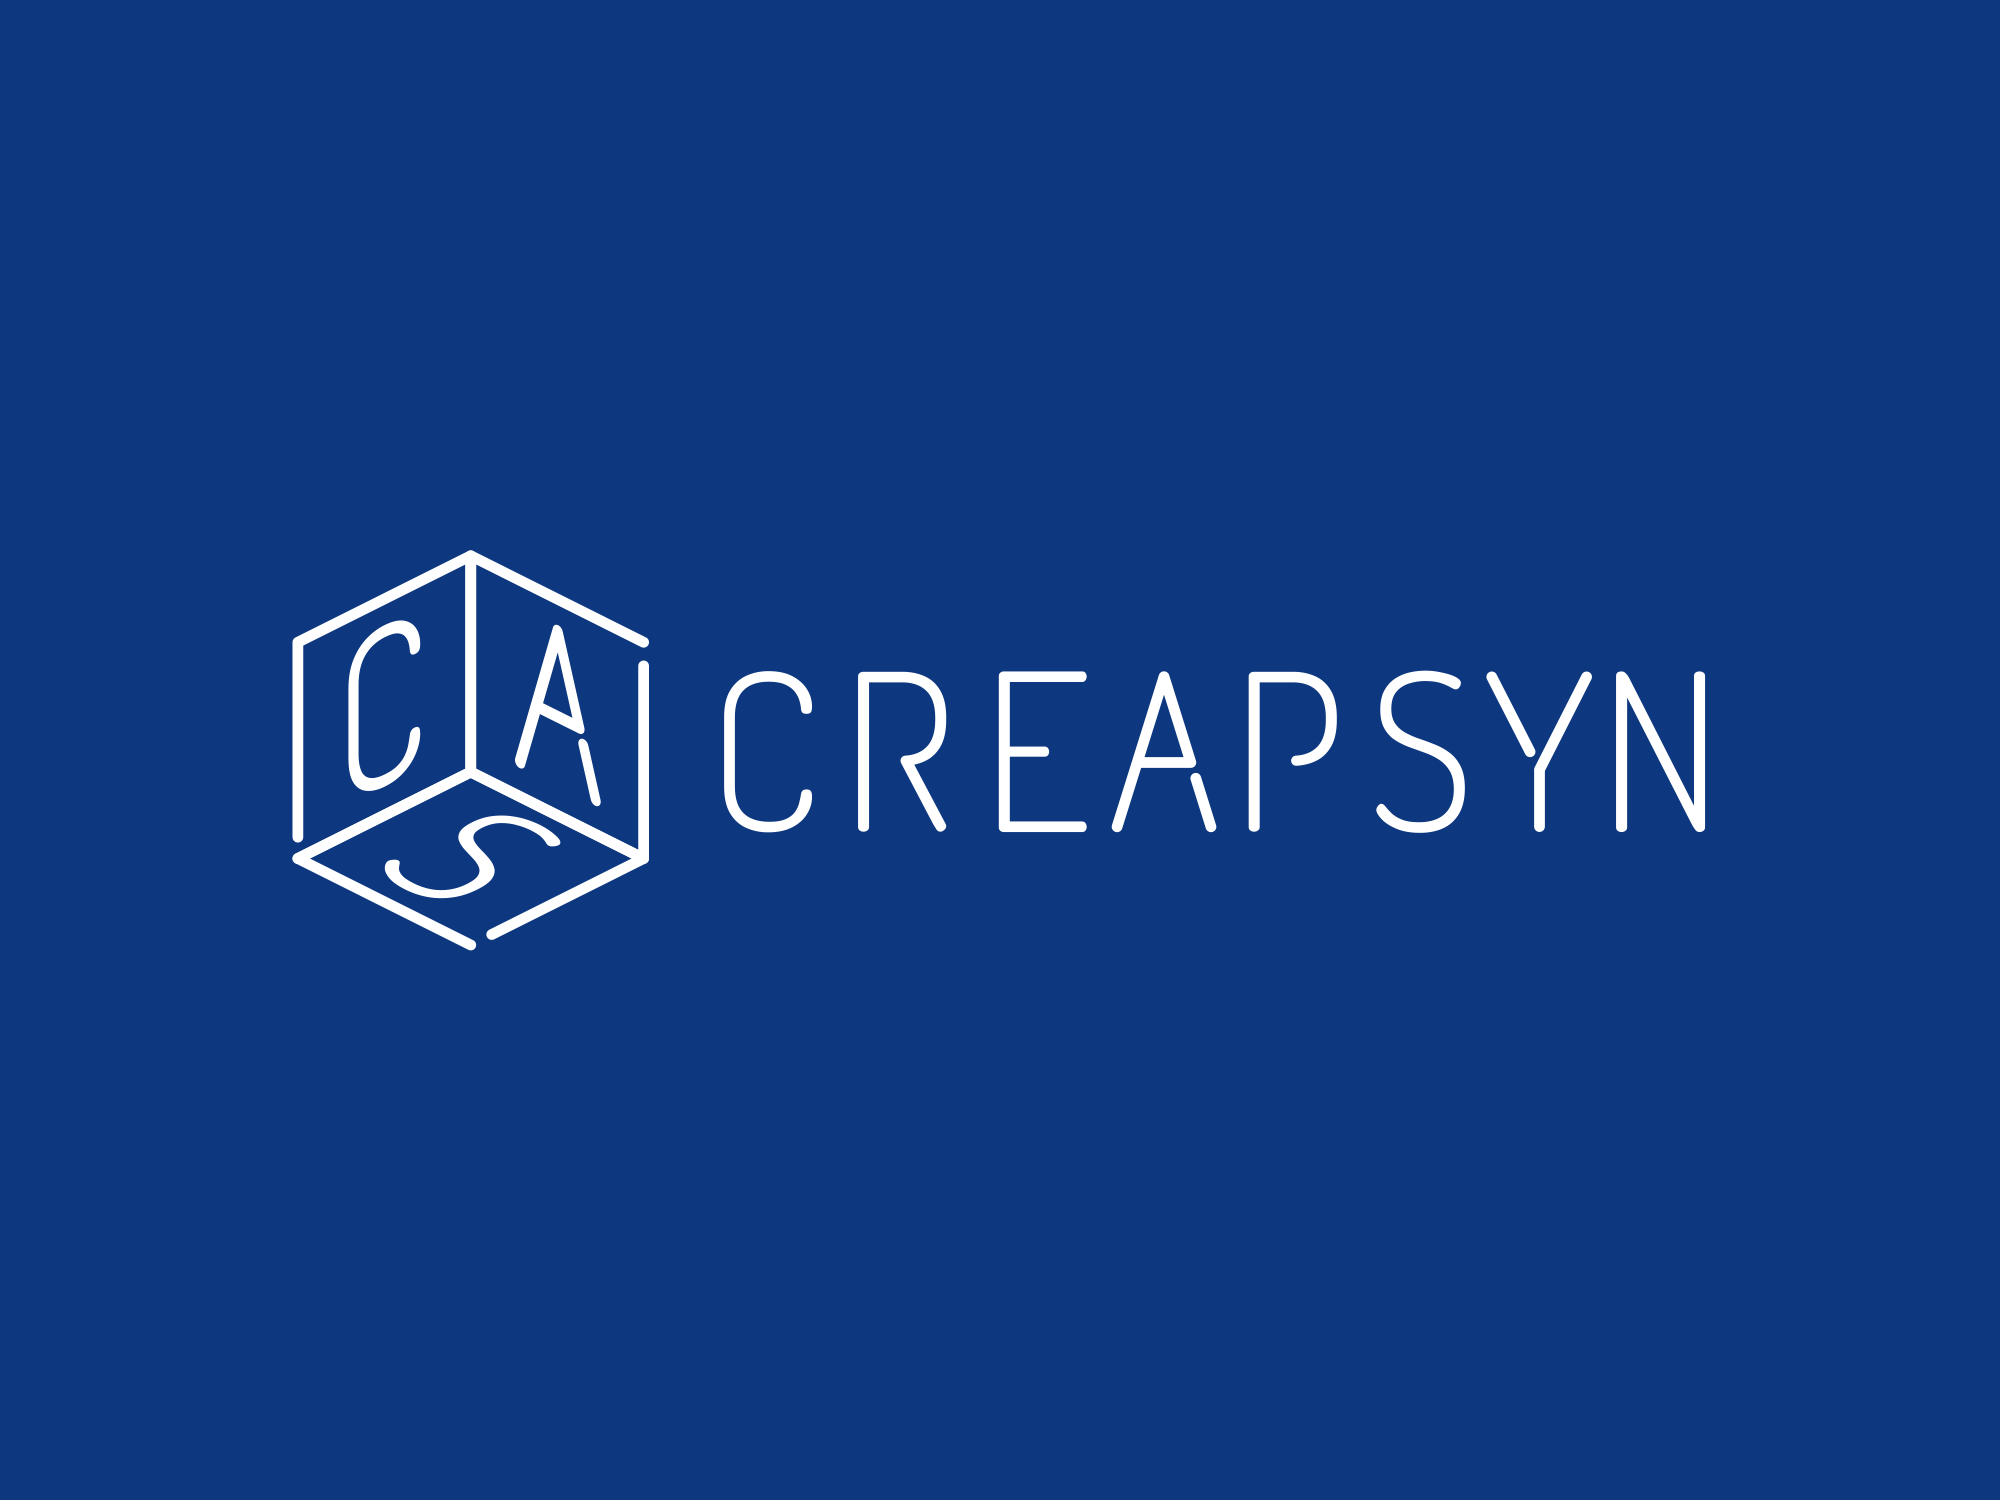 Creapsyn